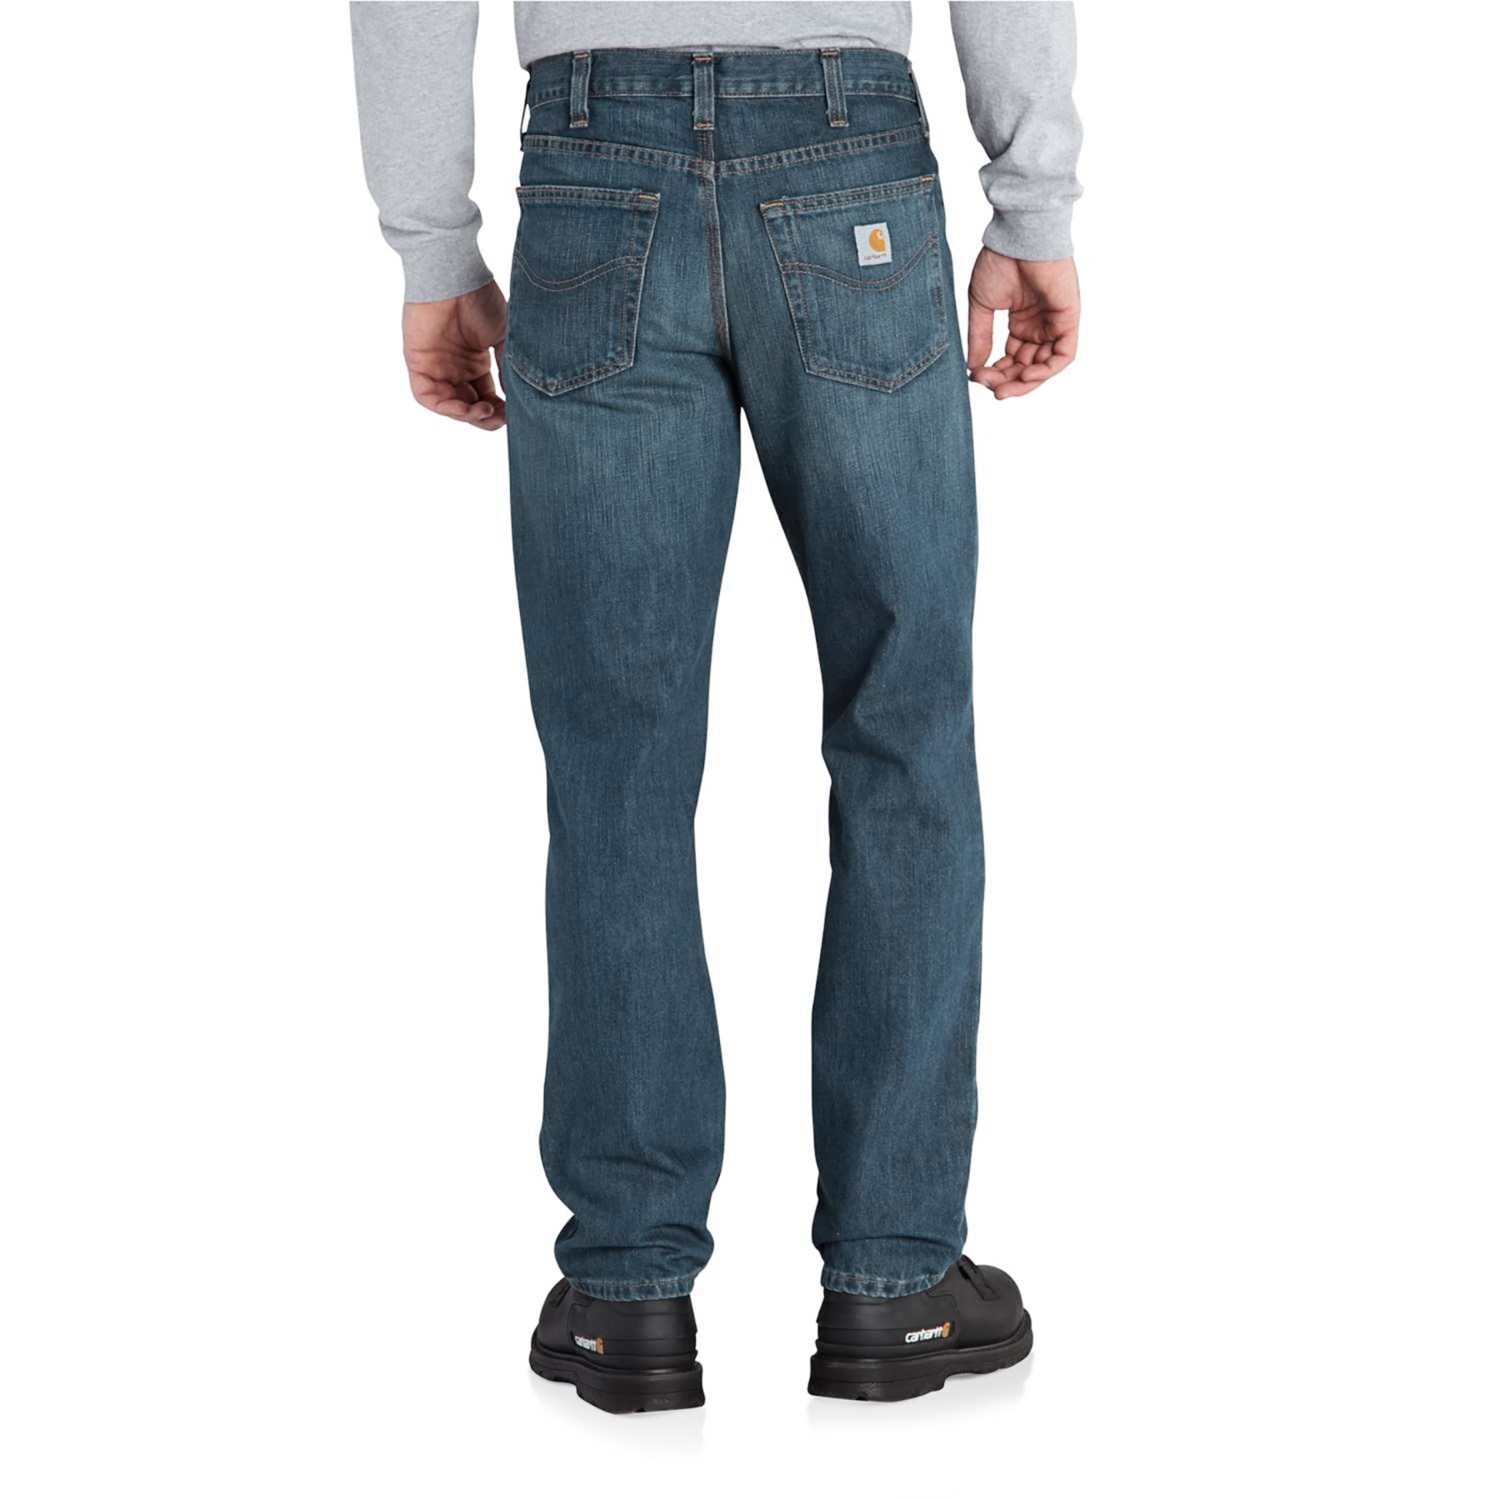 Carhartt Elton Traditional Fit Jeans (For Men)